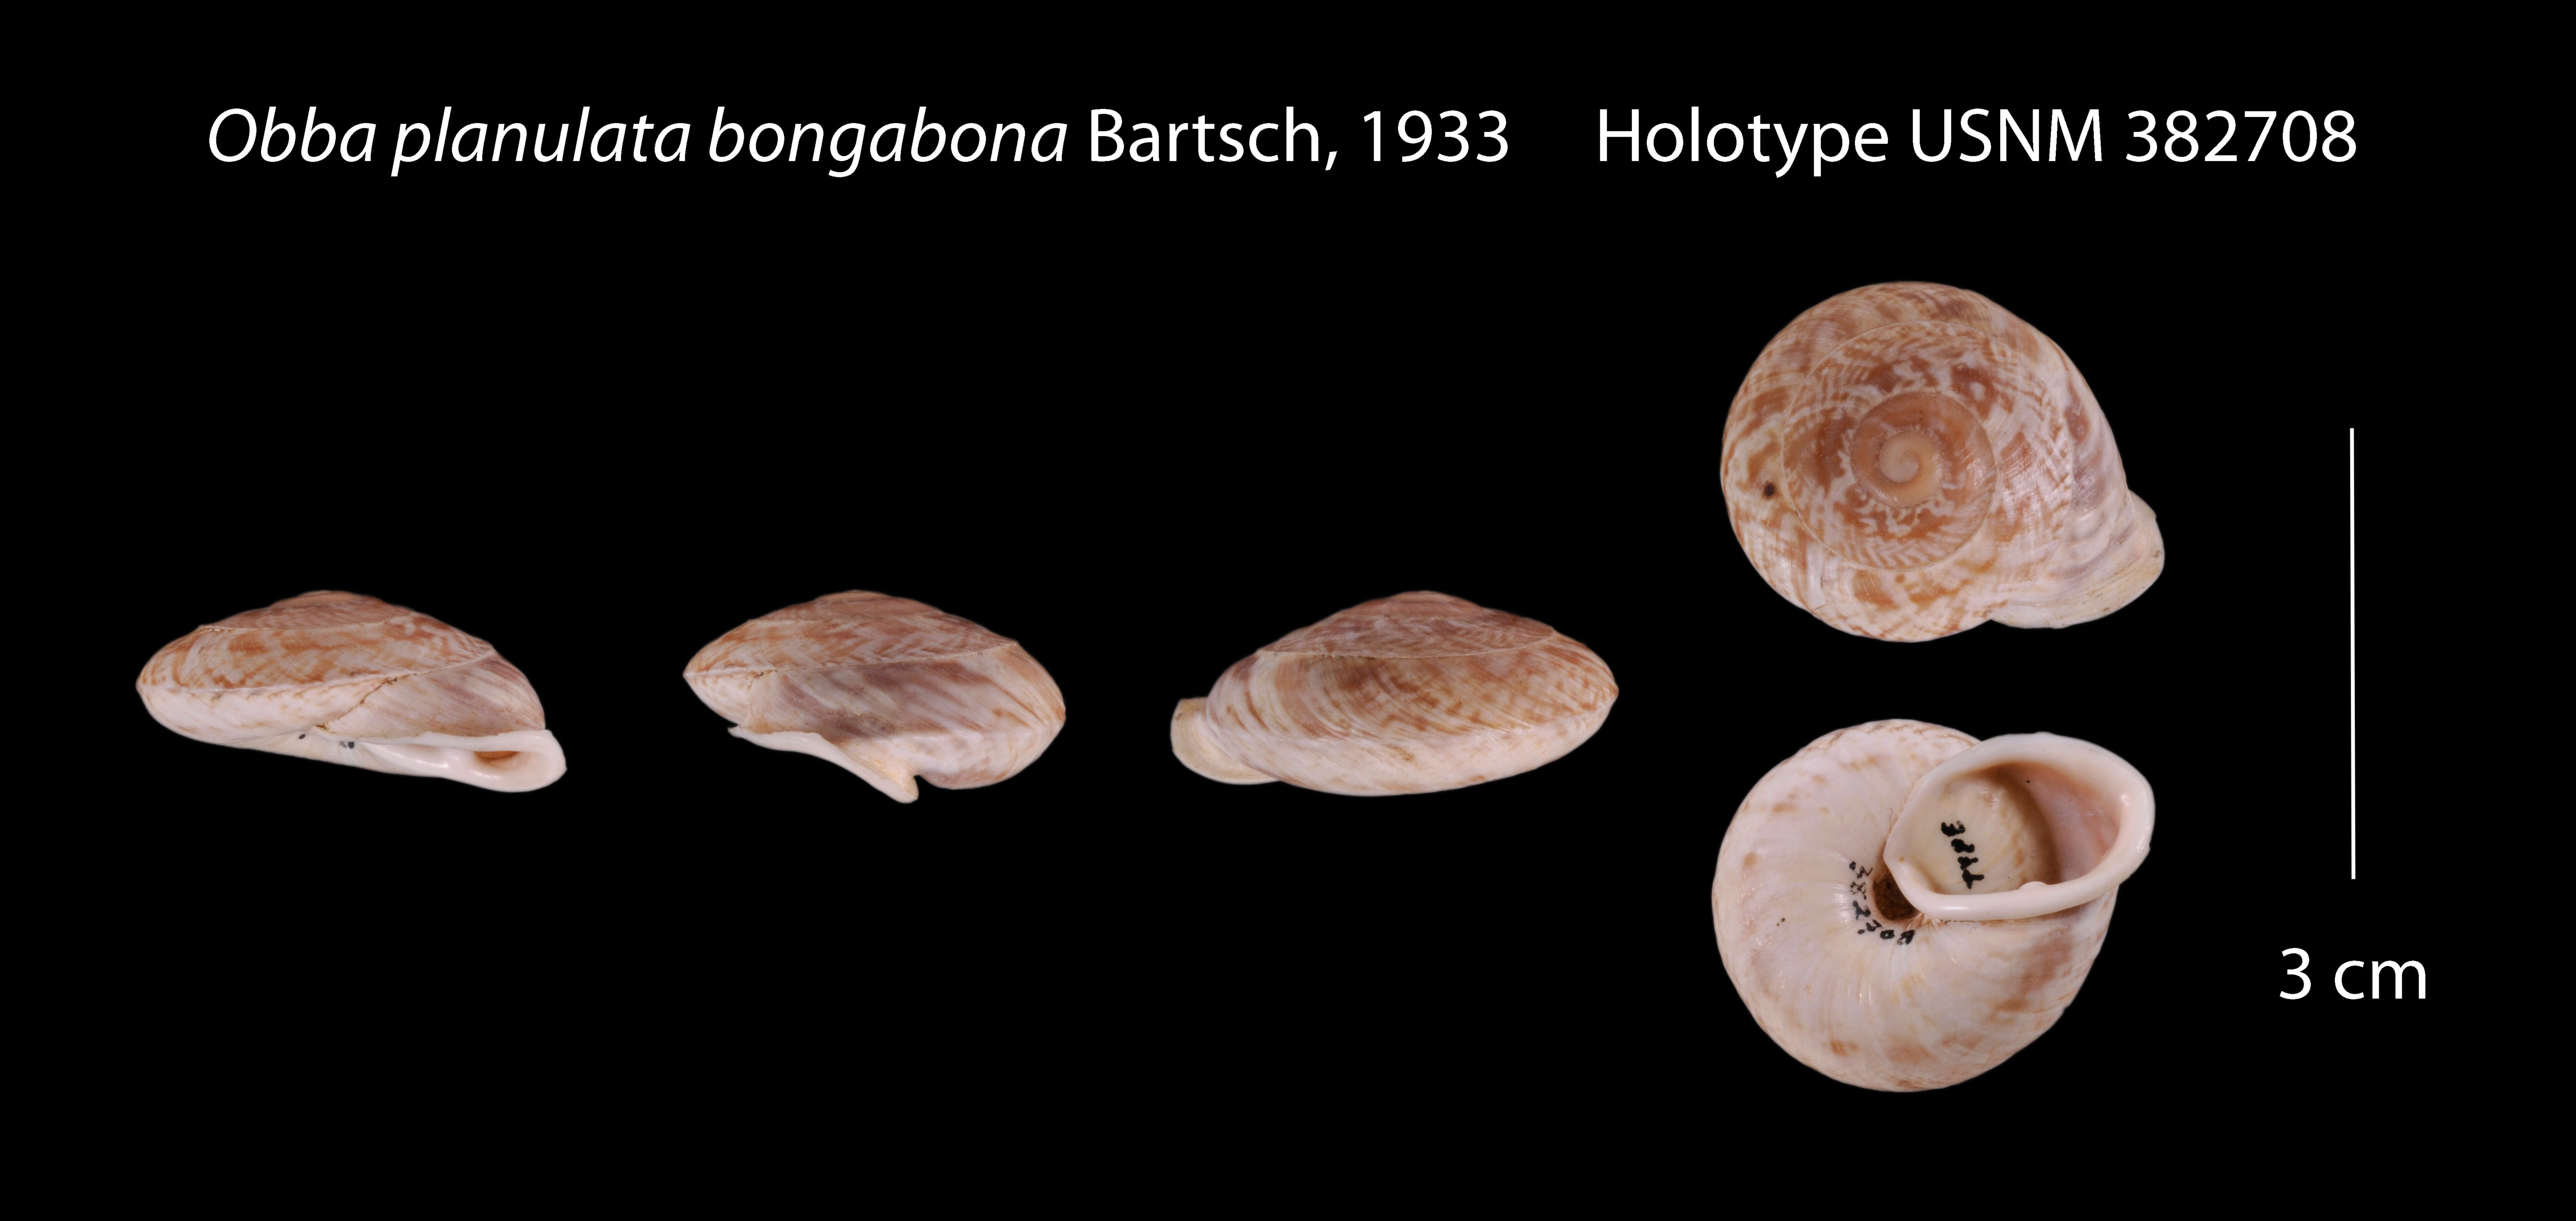 Image of Obba planulata bongabona Bartsch 1933